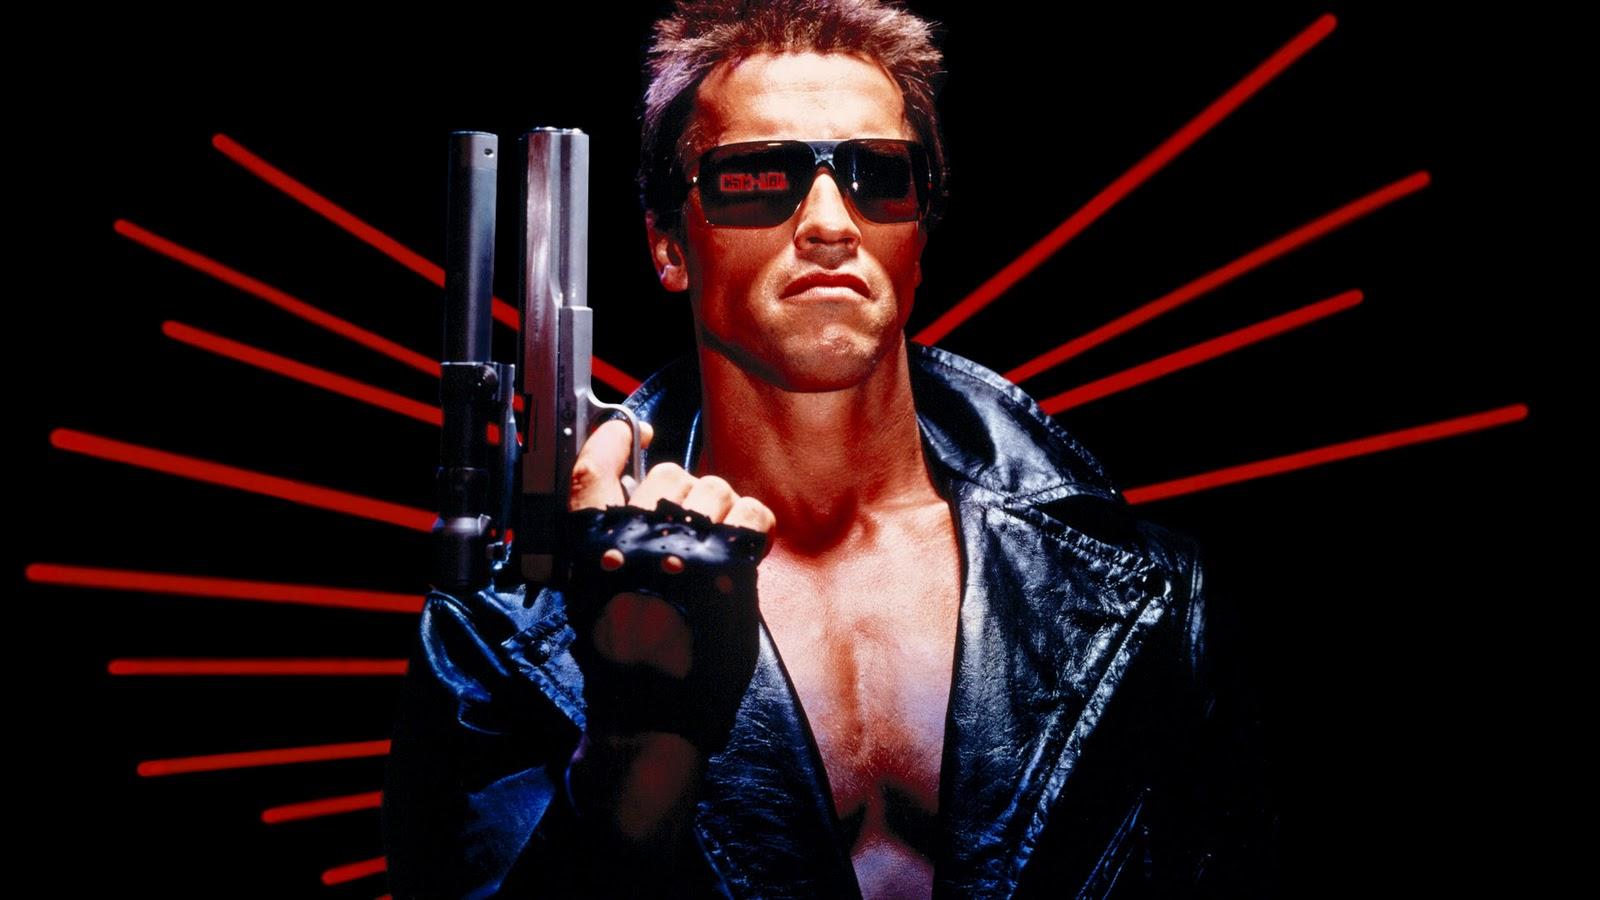 La franquicia “Terminator” será reiniciada